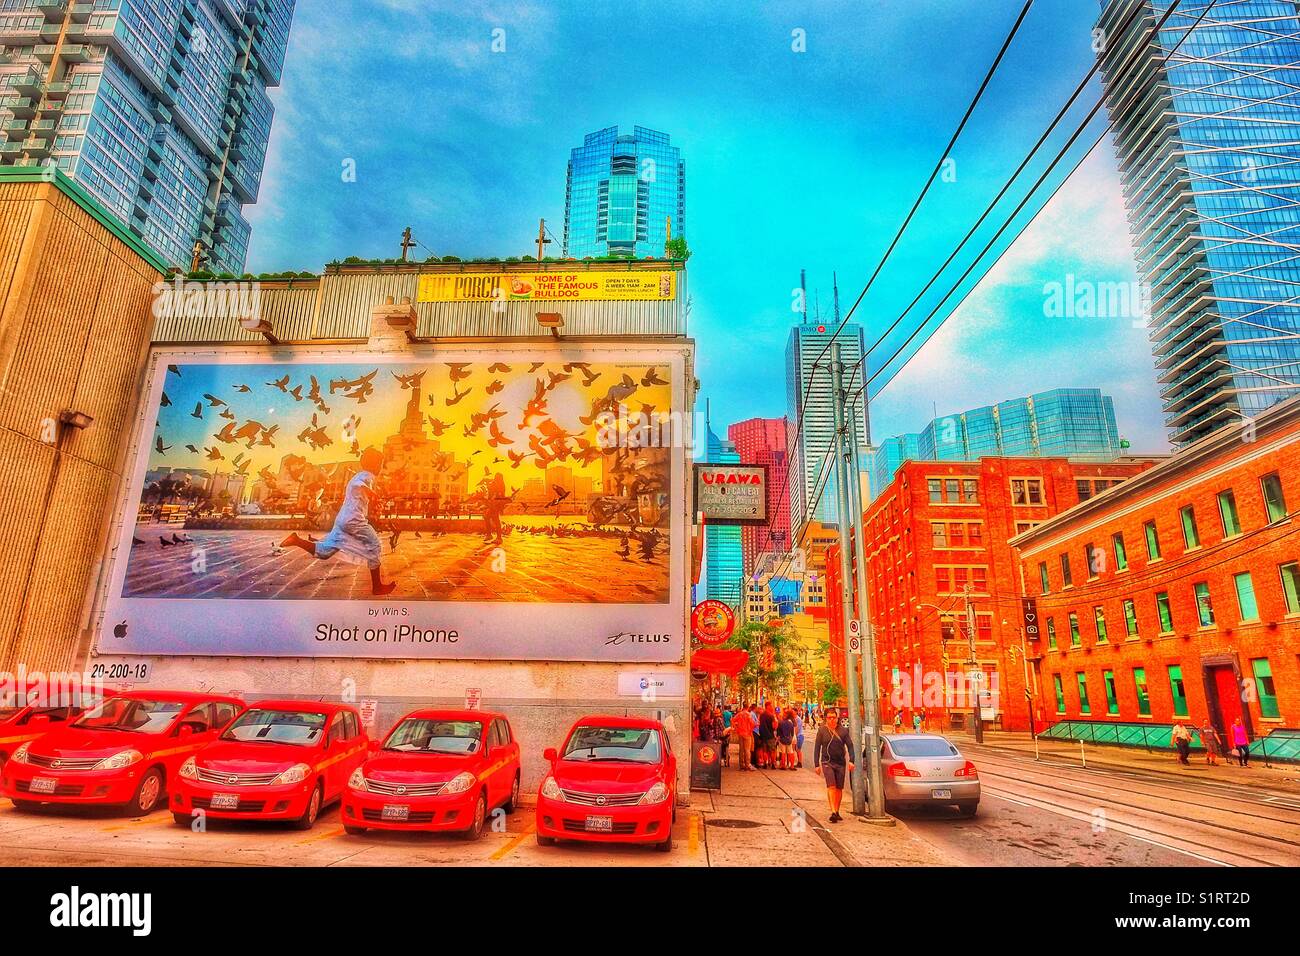 Giant billboard advertising iPhone, Toronto, Ontario, Canada Stock